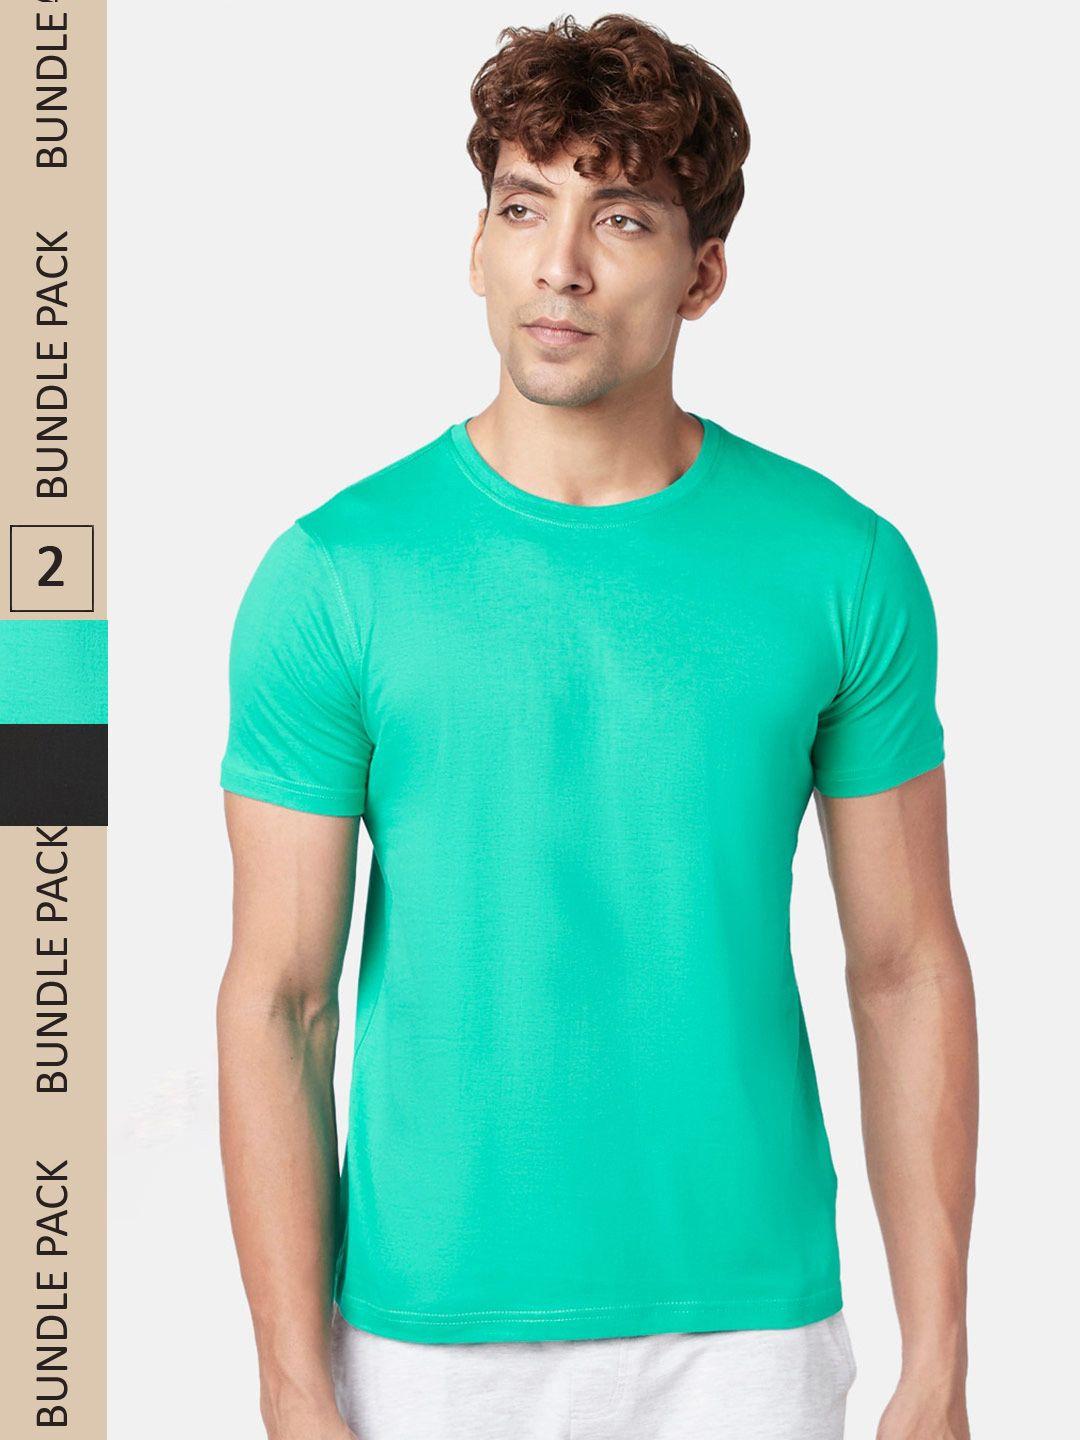 ajile by pantaloons men green 2 t-shirt